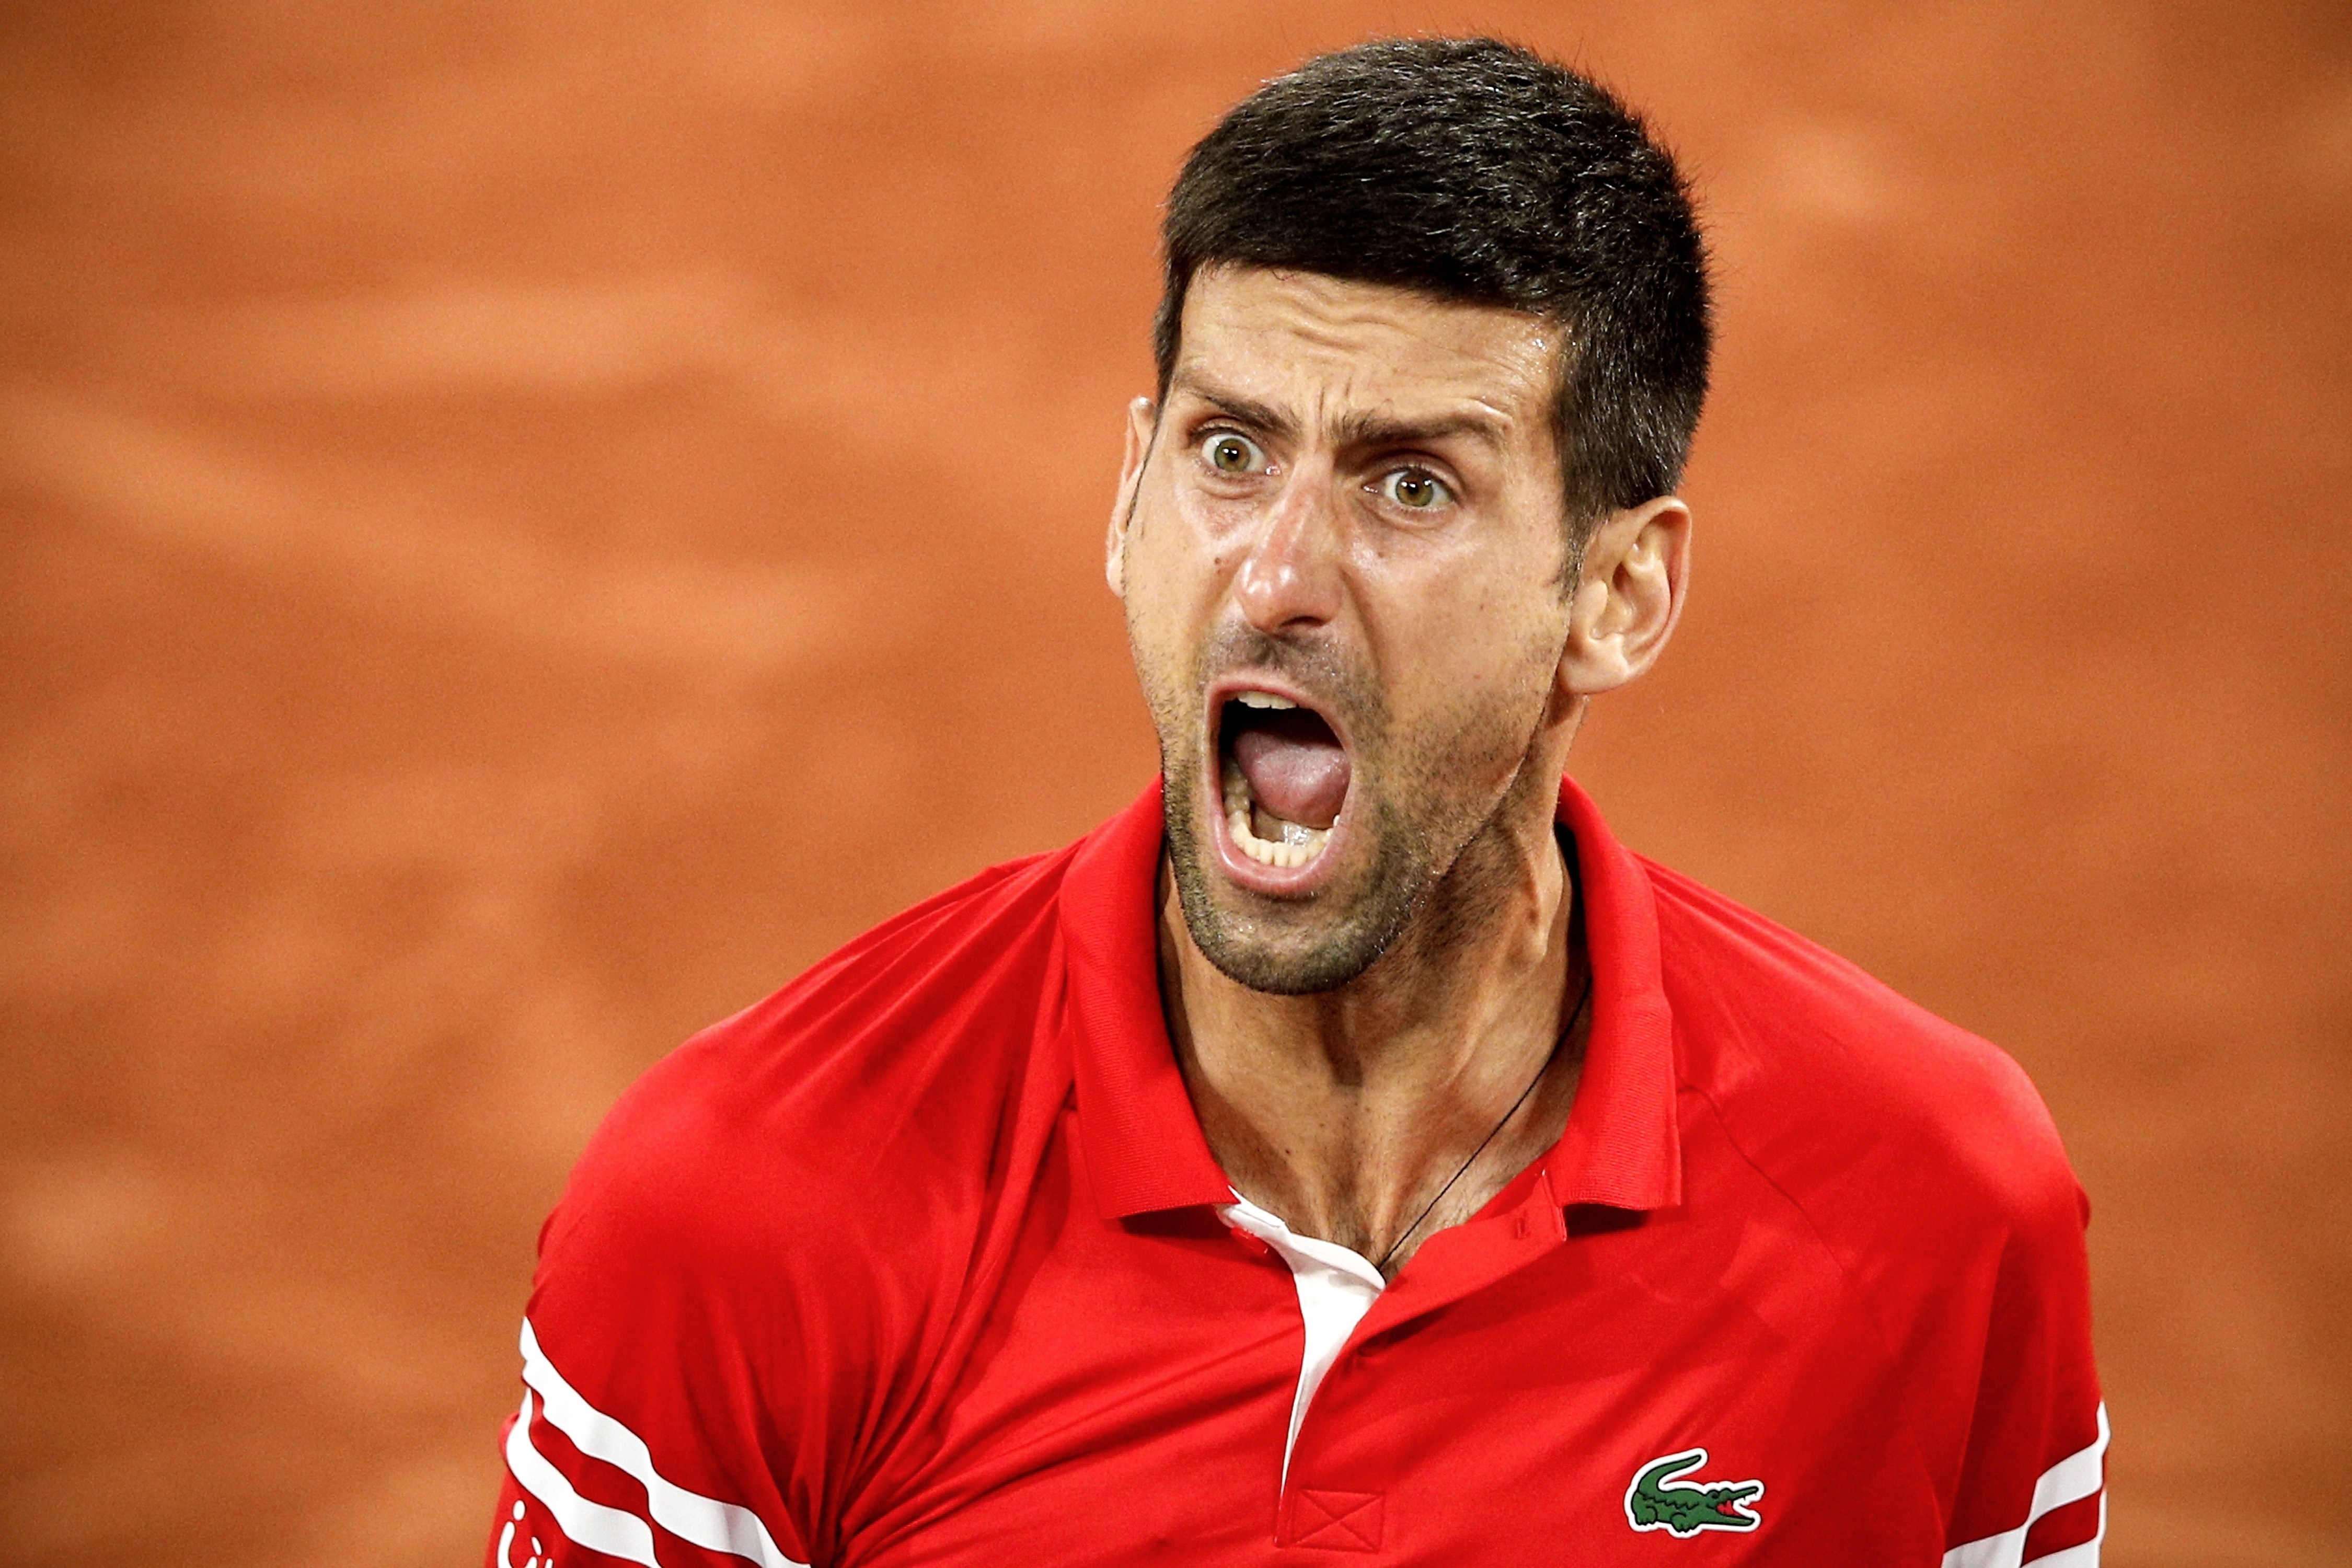 El serbio Novak Djokovic renunció a jugar el Masters 1000 de Cincinnati